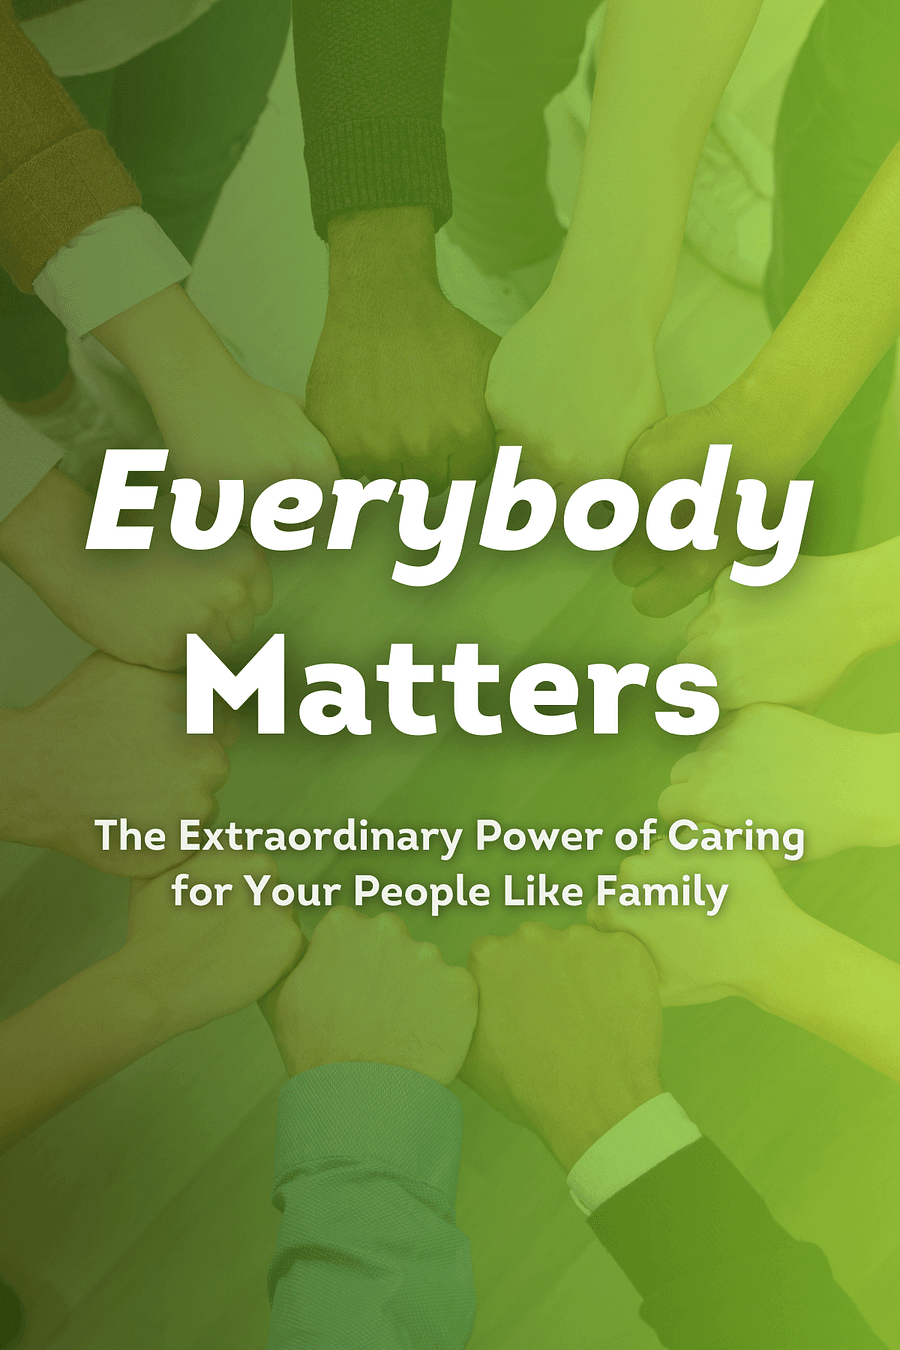 Everybody Matters by Bob Chapman, Raj Sisodia - Book Summary